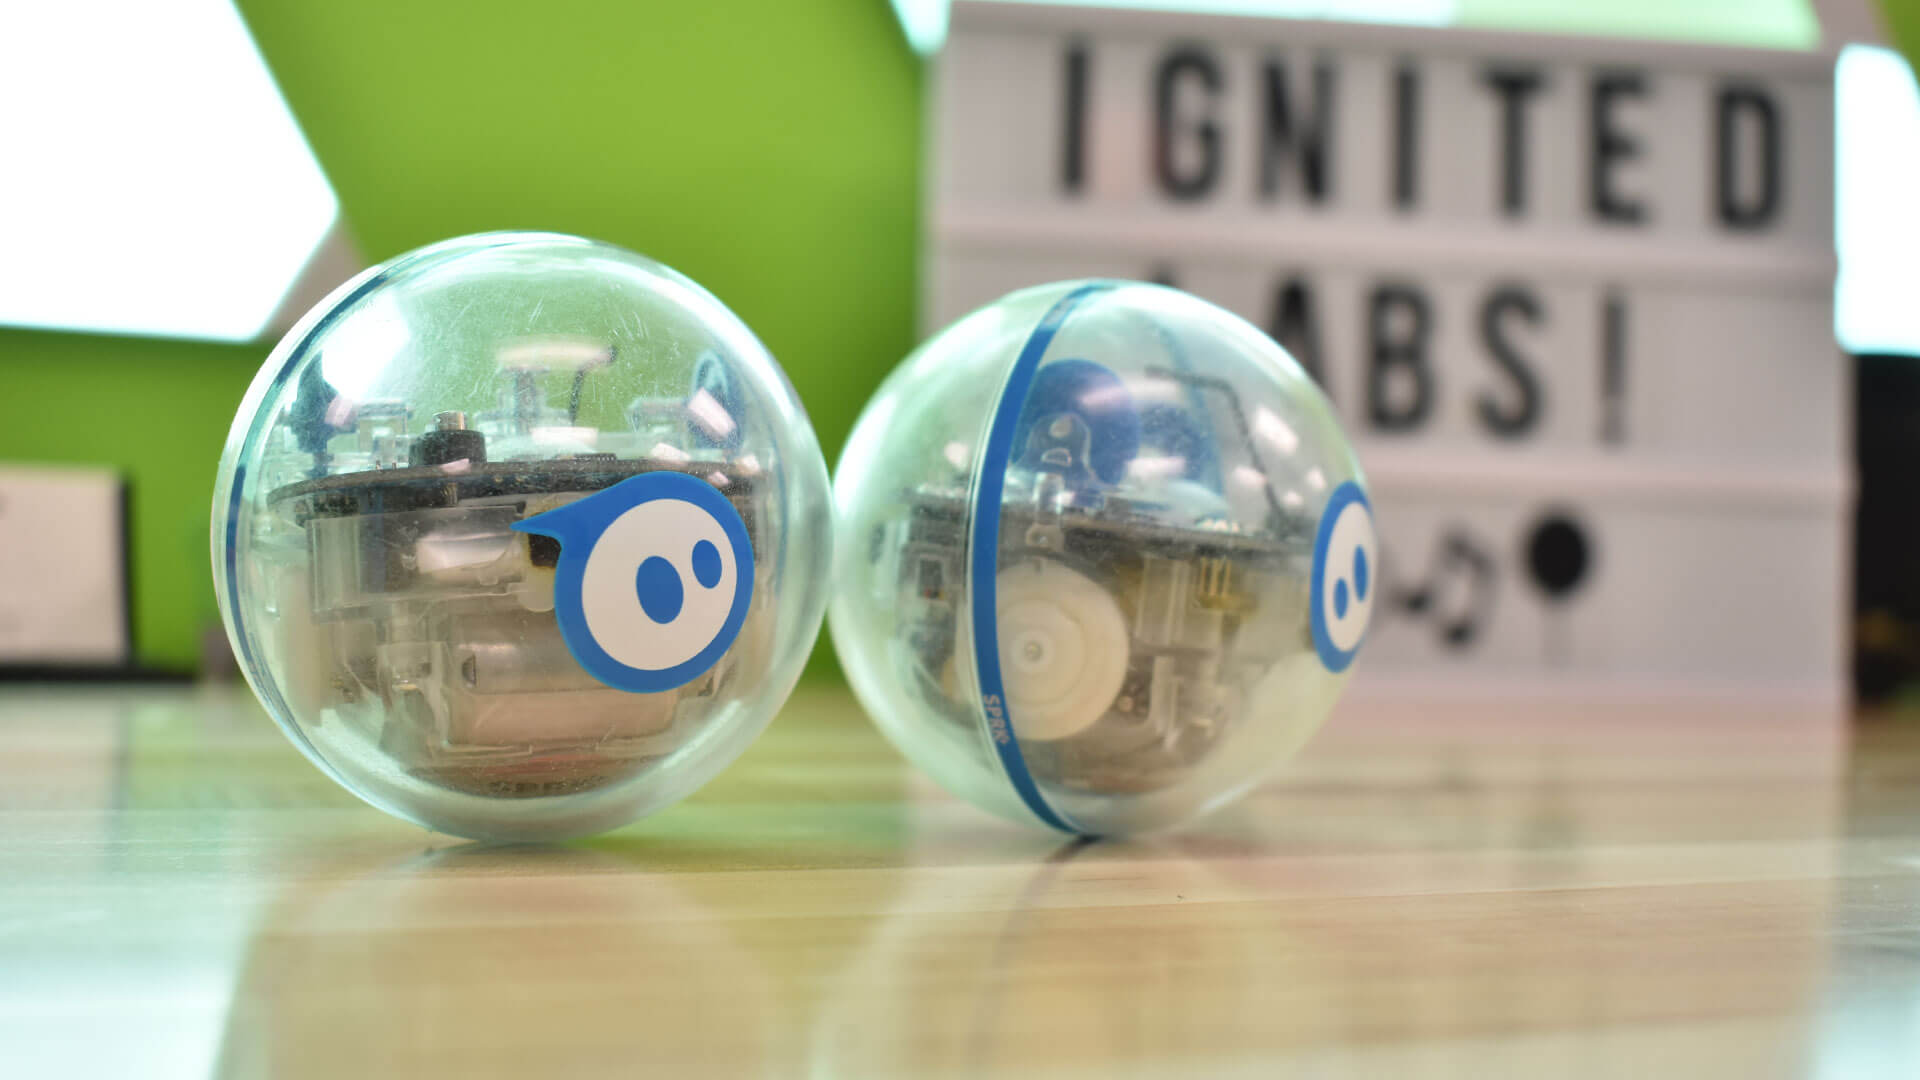 Sphero SPRK+ Bluetooth Smartphone Robotic Ball